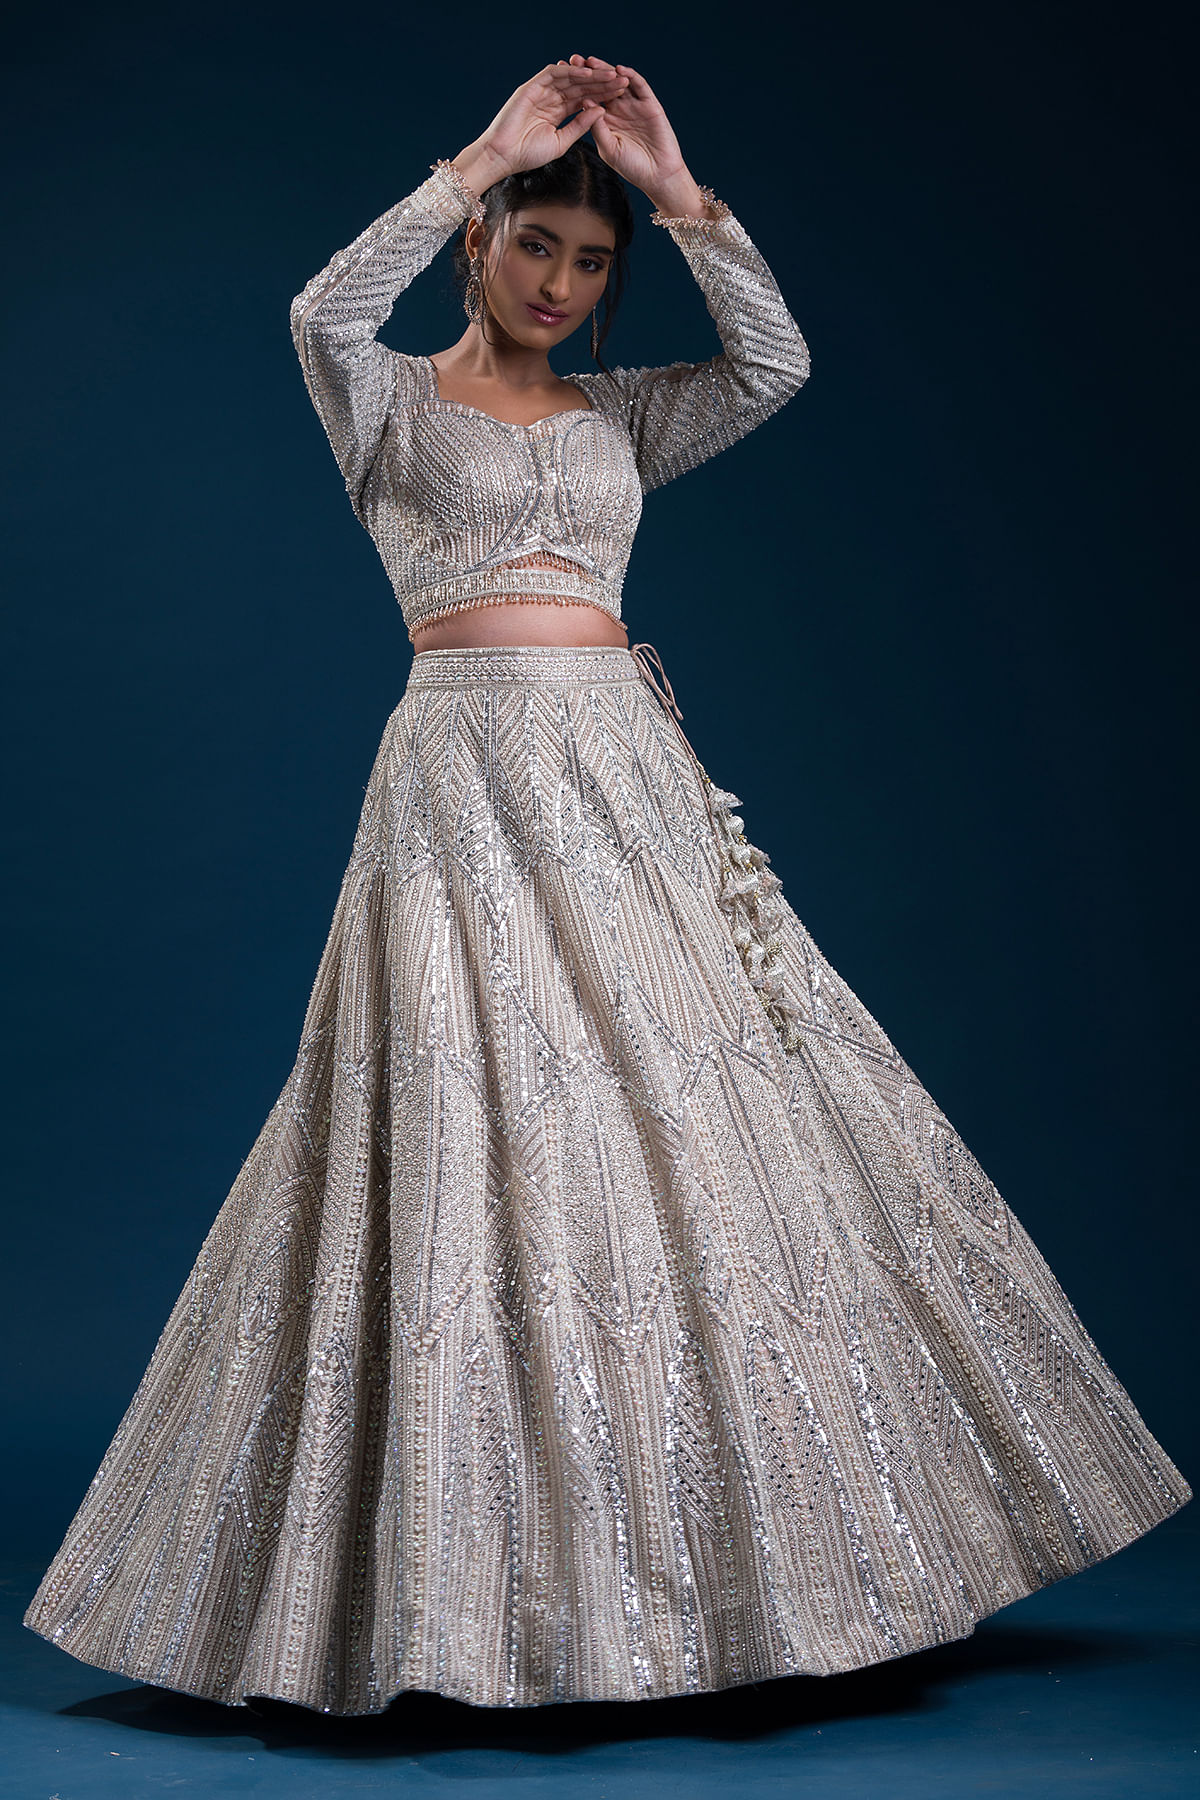 Fantabulous Pakistani Designer Wedding Lehenga in Silver Color